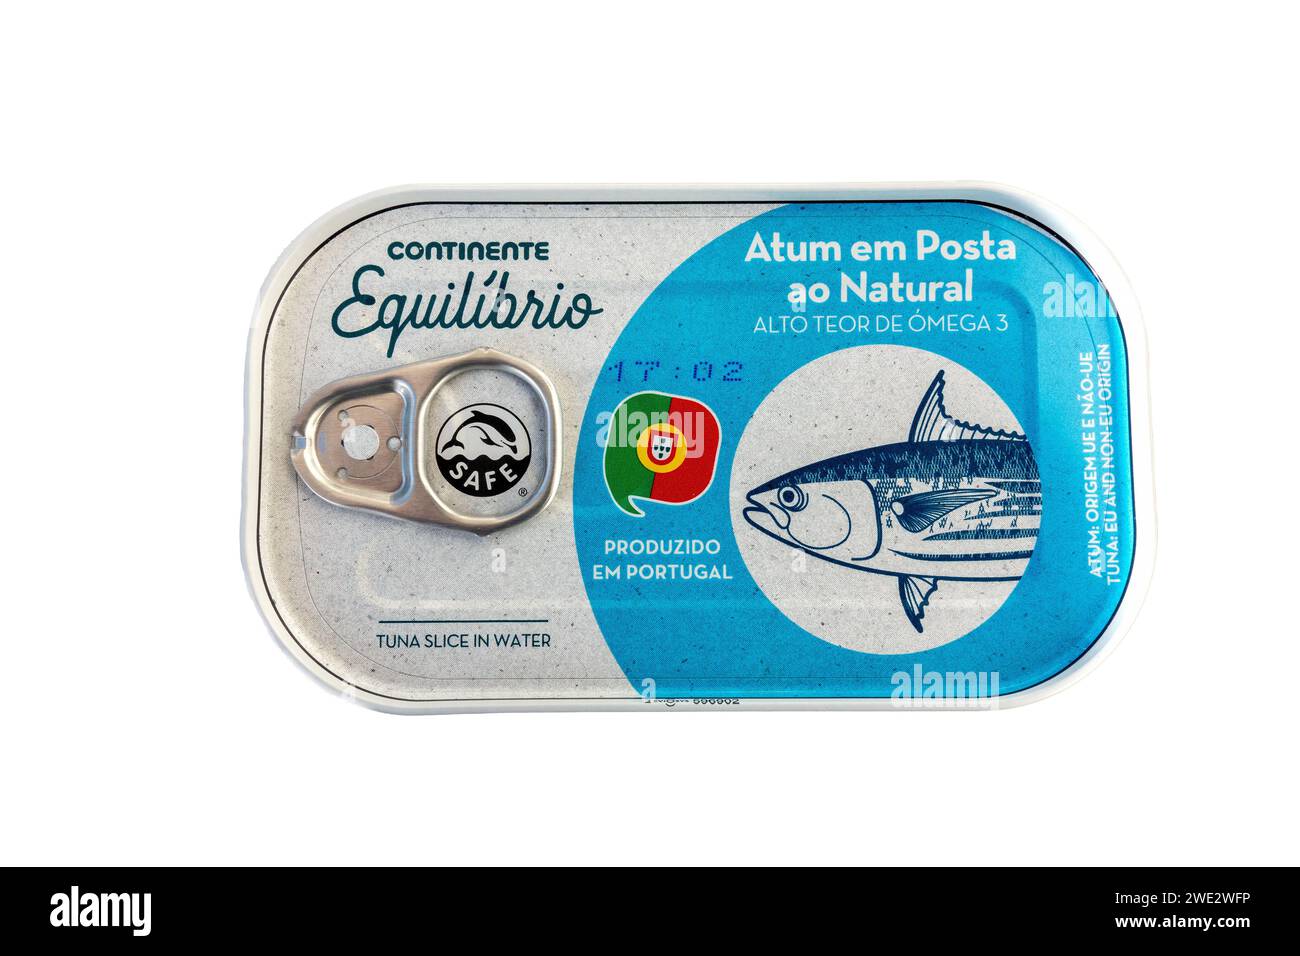 Ringform Thunfisch in Wasser verkauft von Continente Supermarkets Product of Portugal, atum em Posta ao Natural, 21. Januar 2024 Stockfoto